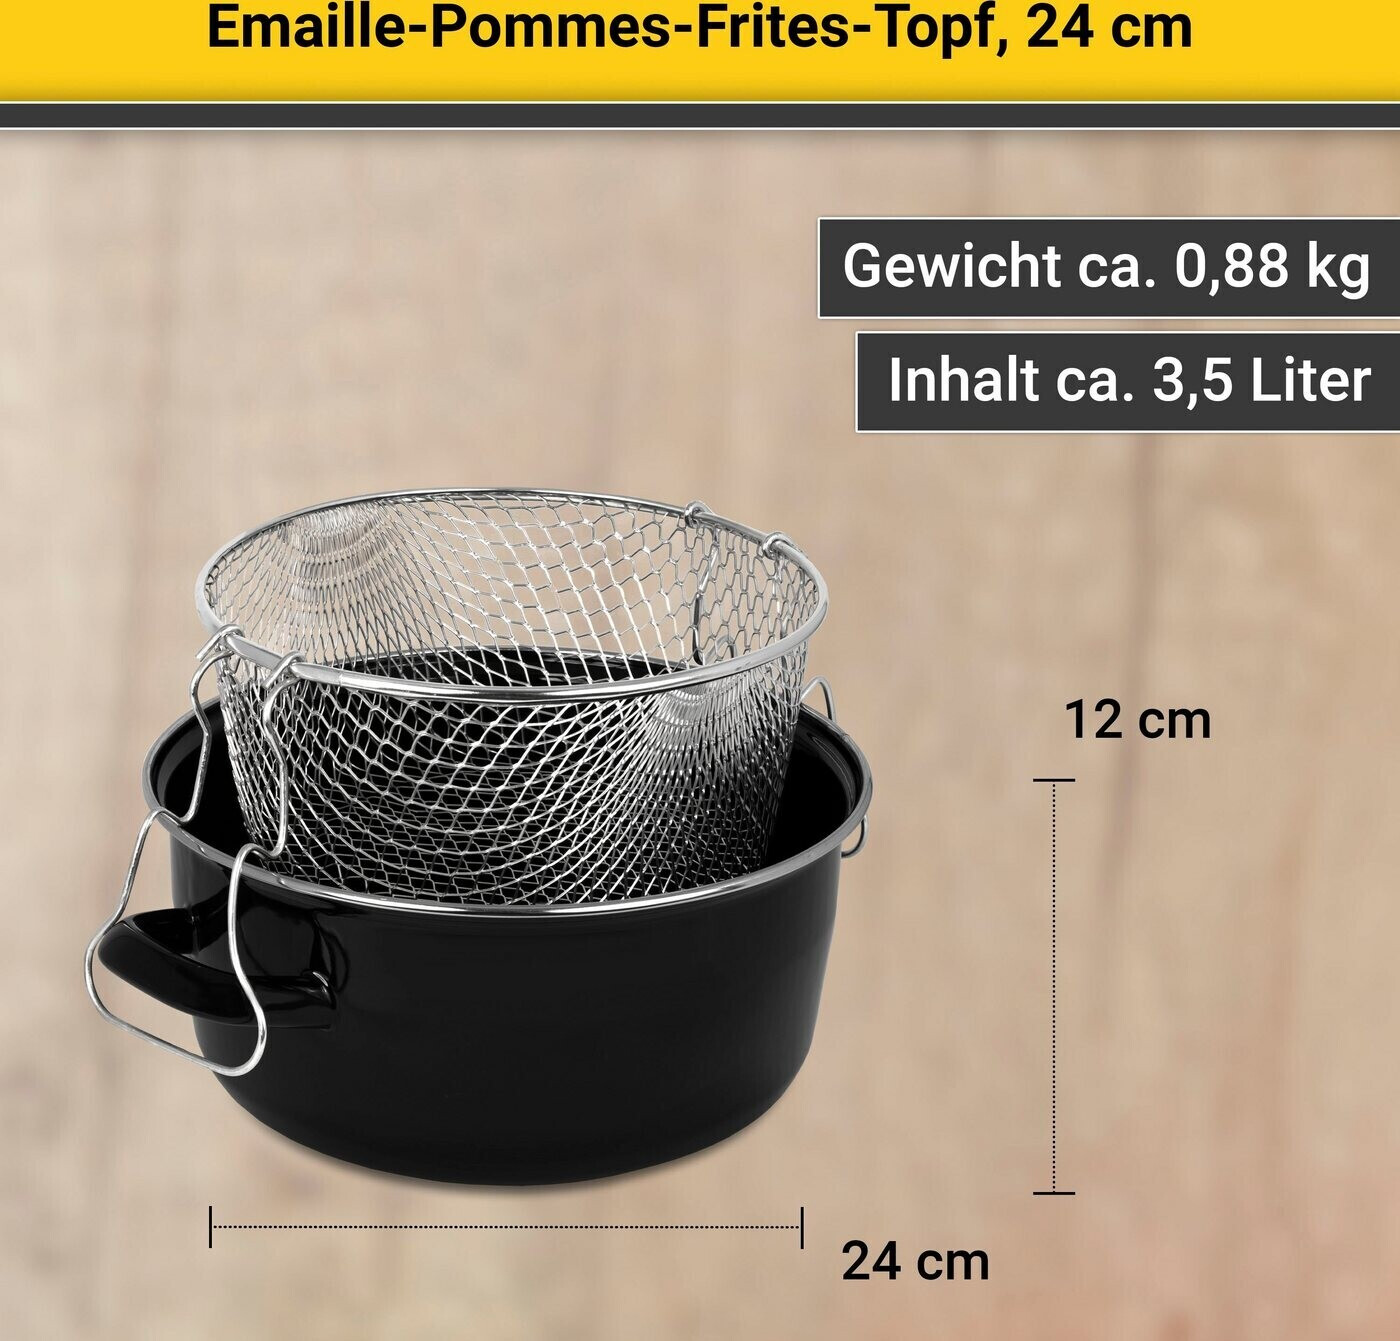 16,10 € ab Krüger 24 bei | cm Pommes-Frites-Topf Preisvergleich